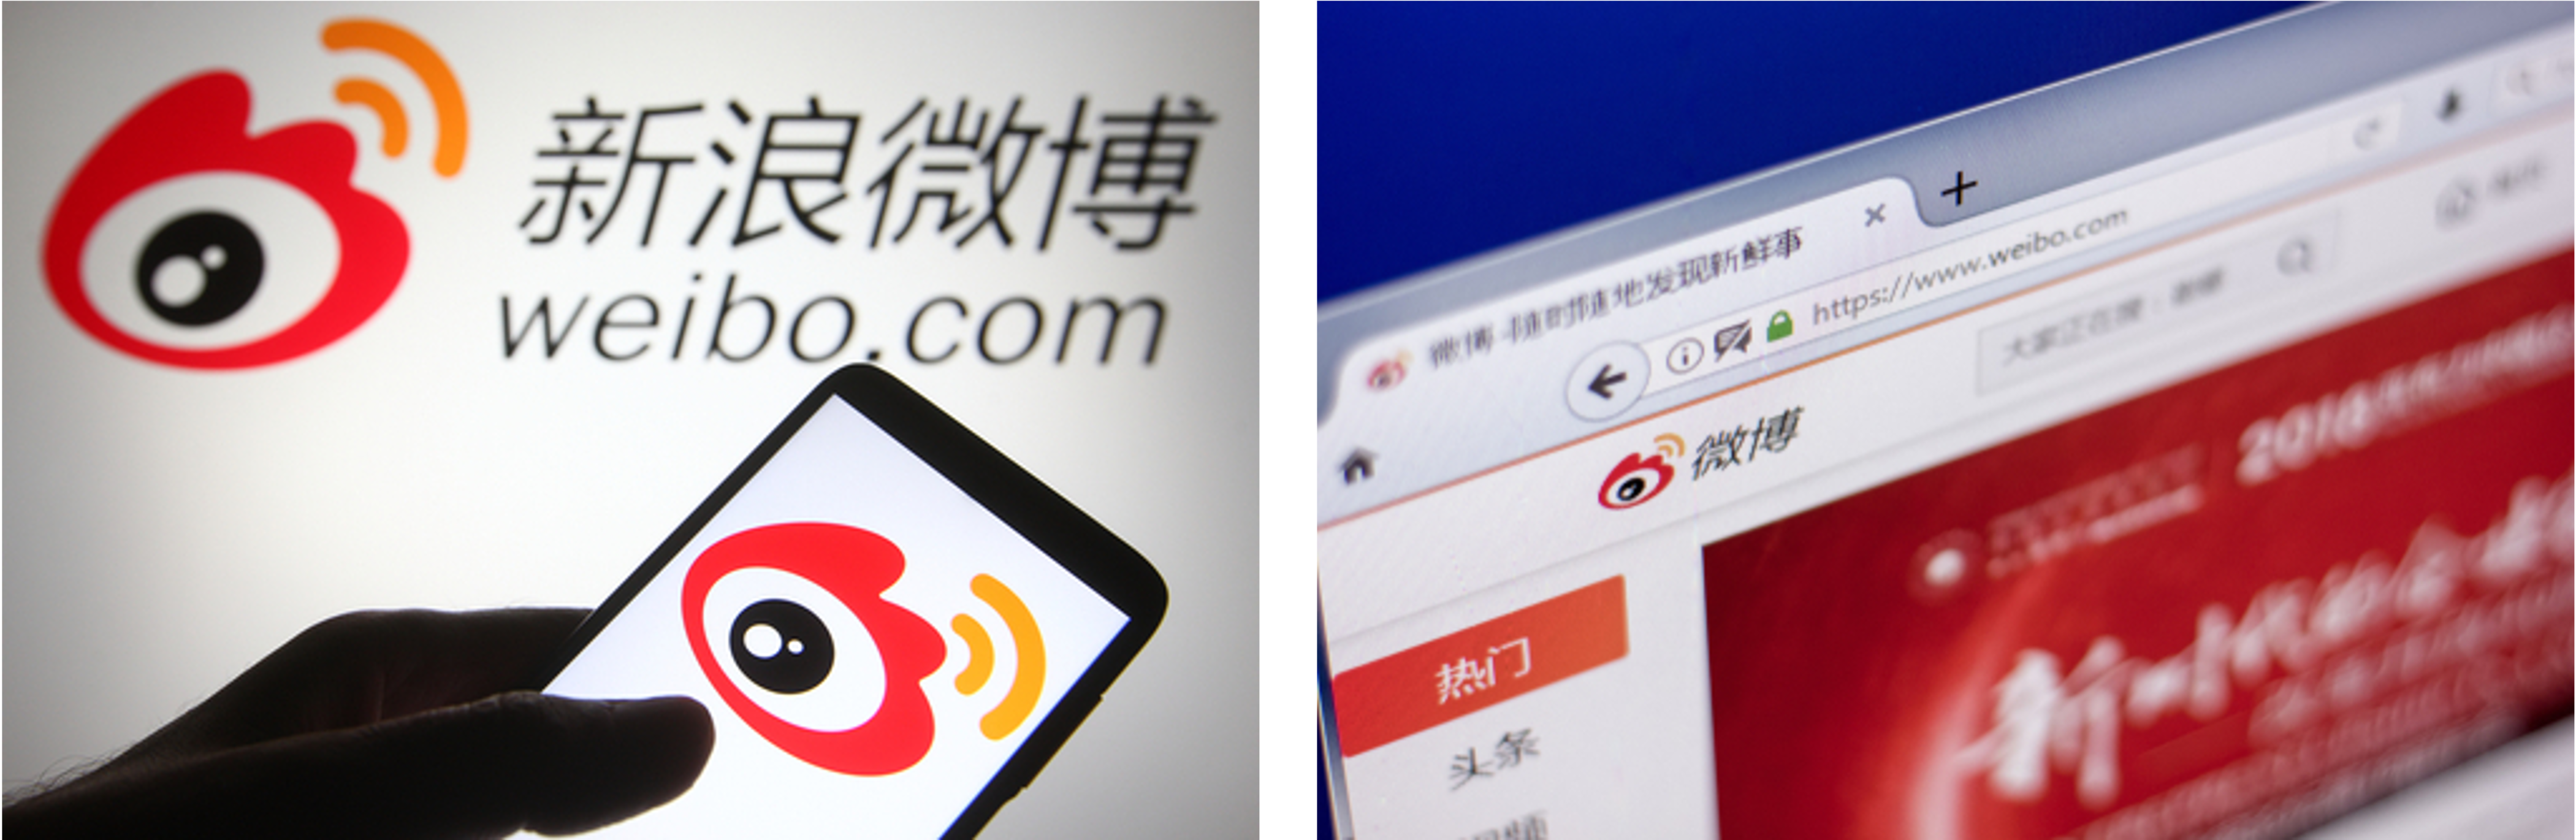 social media platforms & APPs in China: Weibo